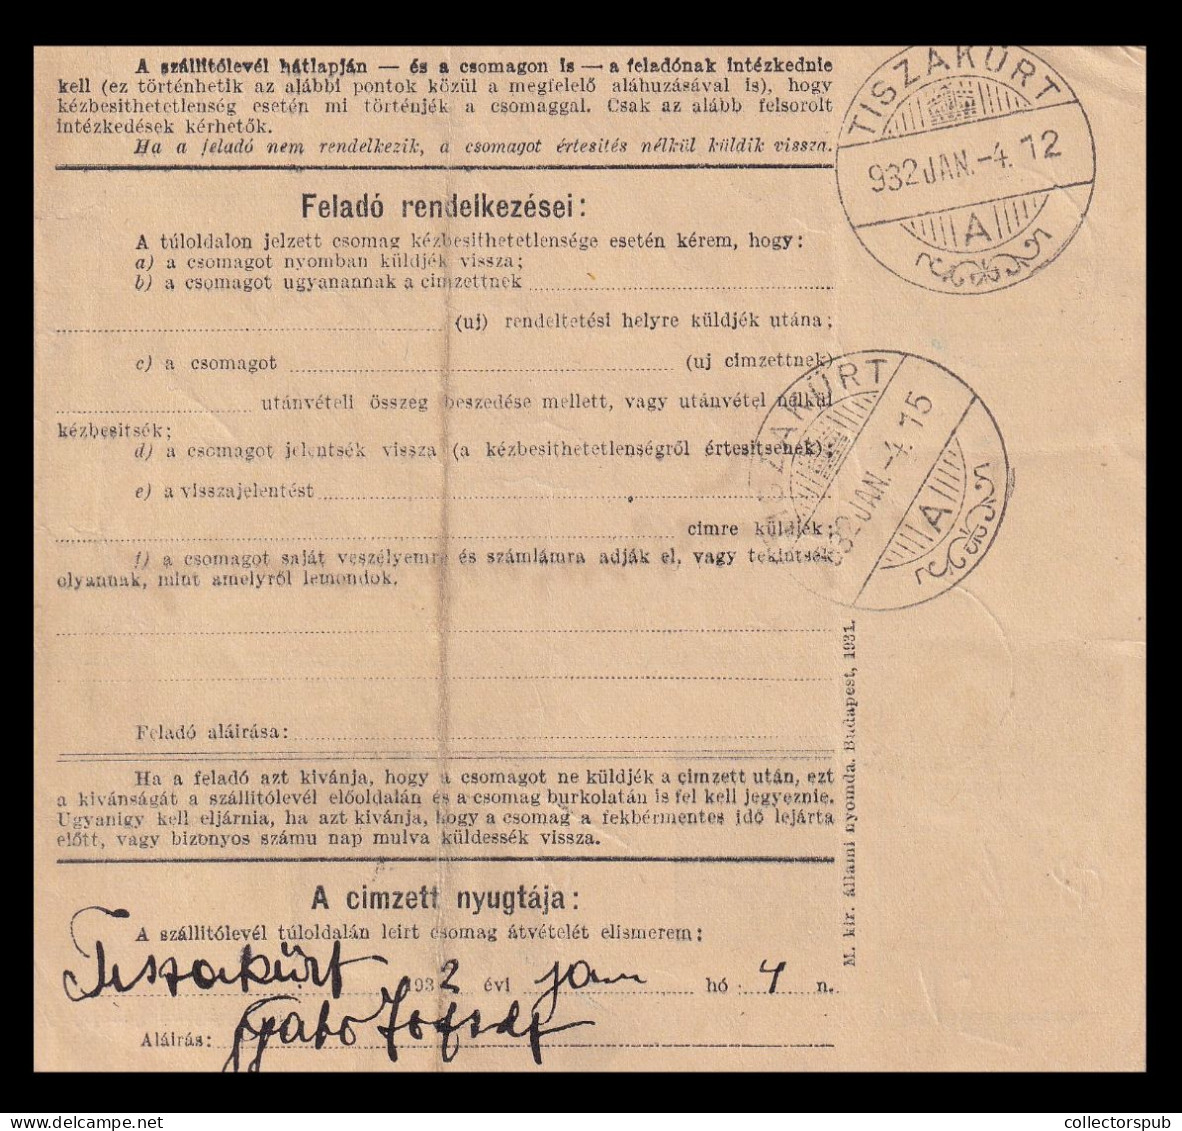 HUNGARY Nice Parcel Post Card  Magyar.Kir.Posta. 25 1932. "terjedelmes" - Parcel Post